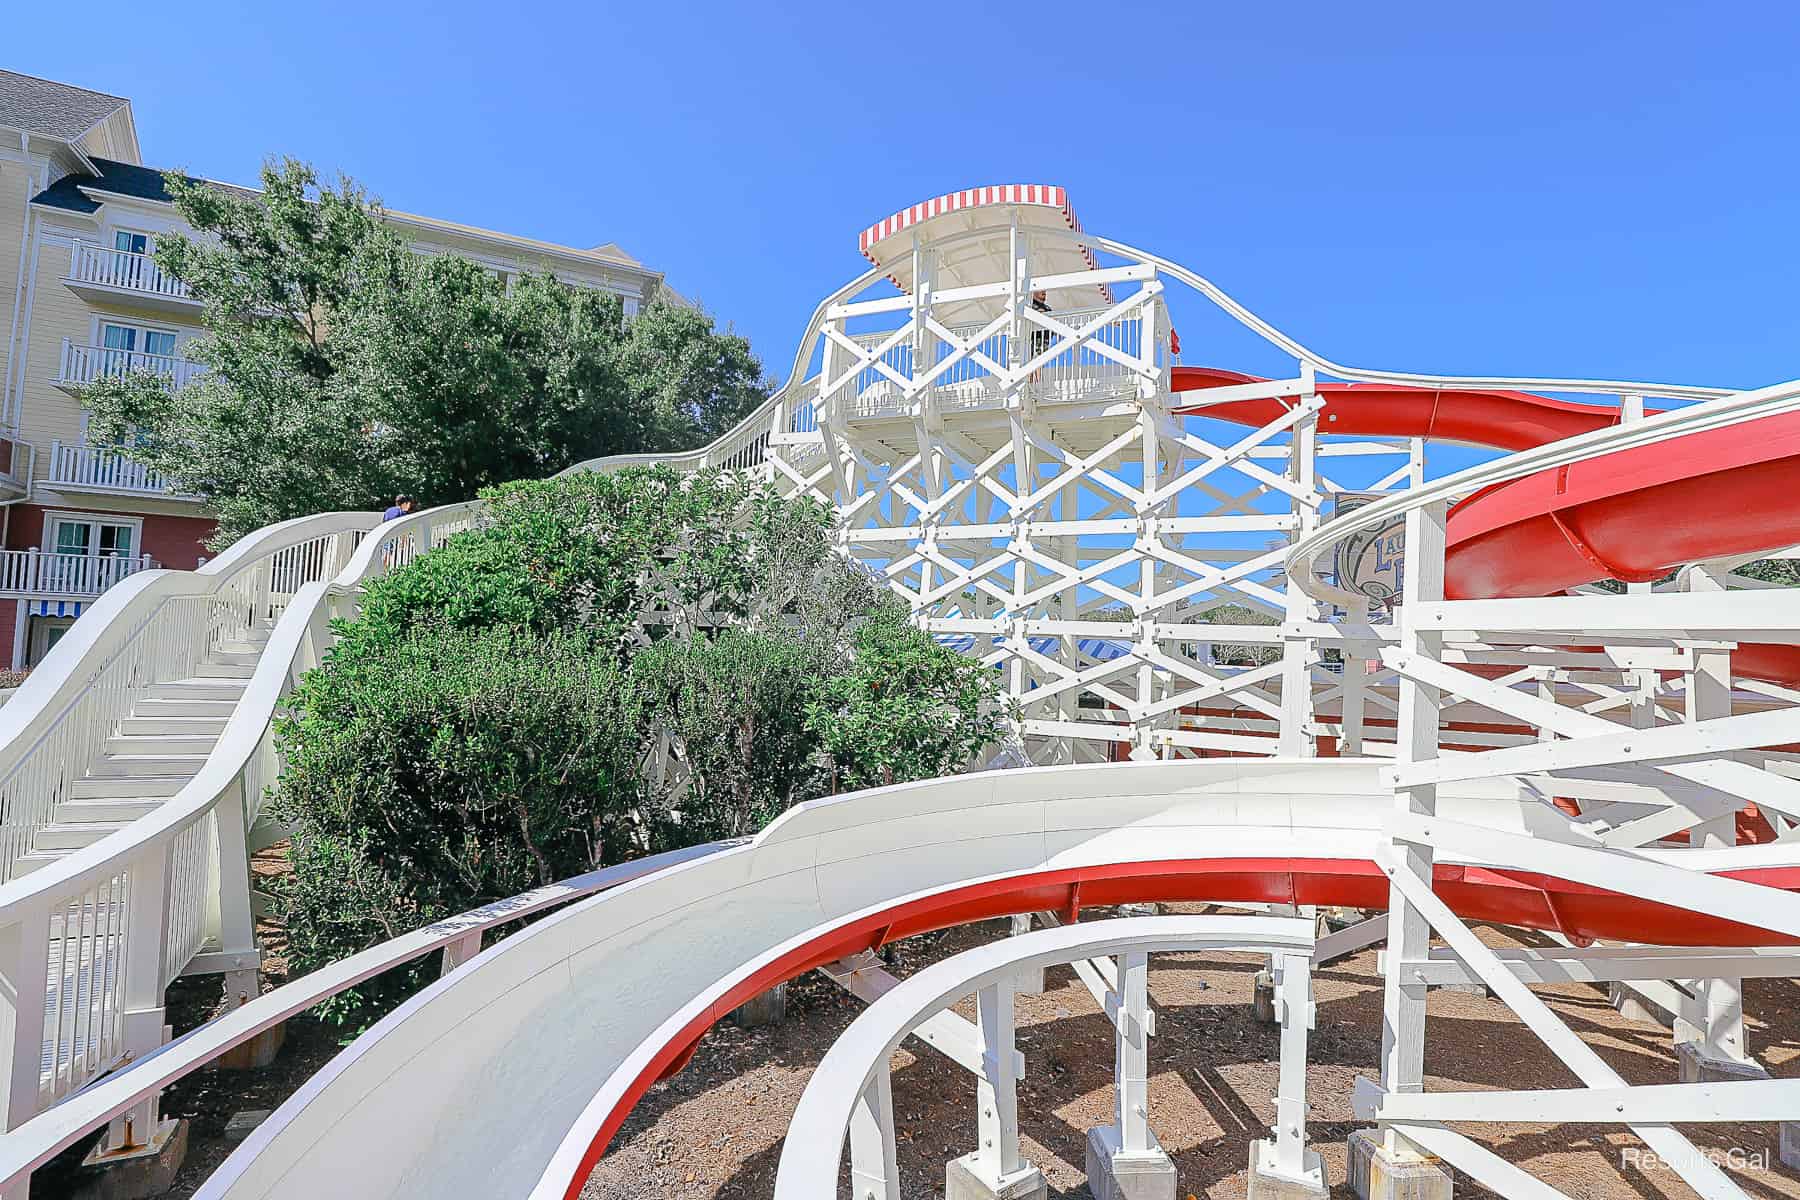 the wooden roller coaster structure of Boardwalk Inn's slide 